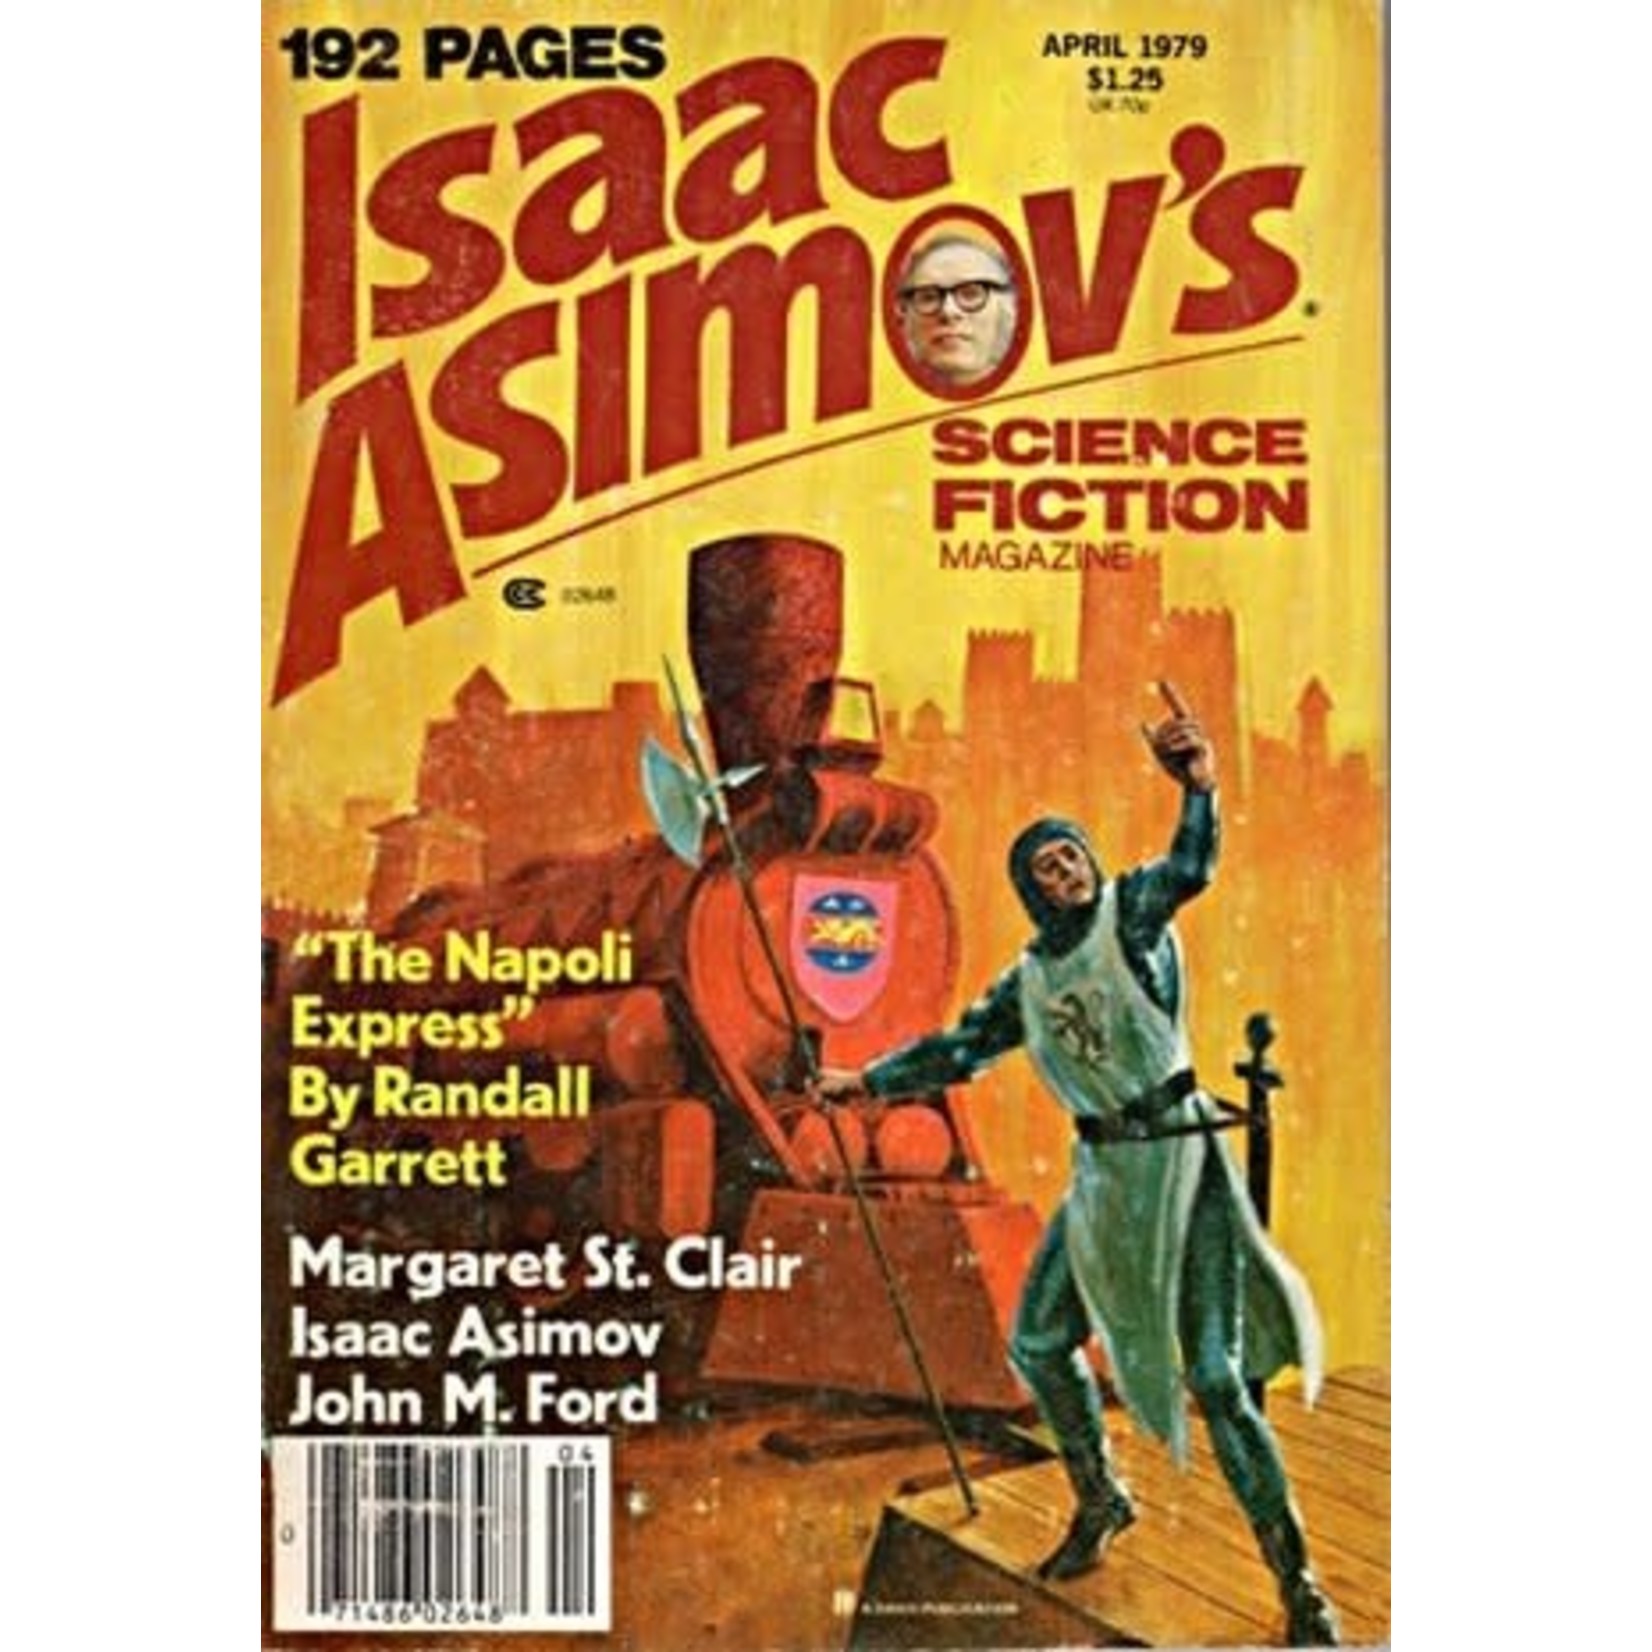 Asimov, Isaac Isaac Assimov's Science Fiction Magazine: April 1979